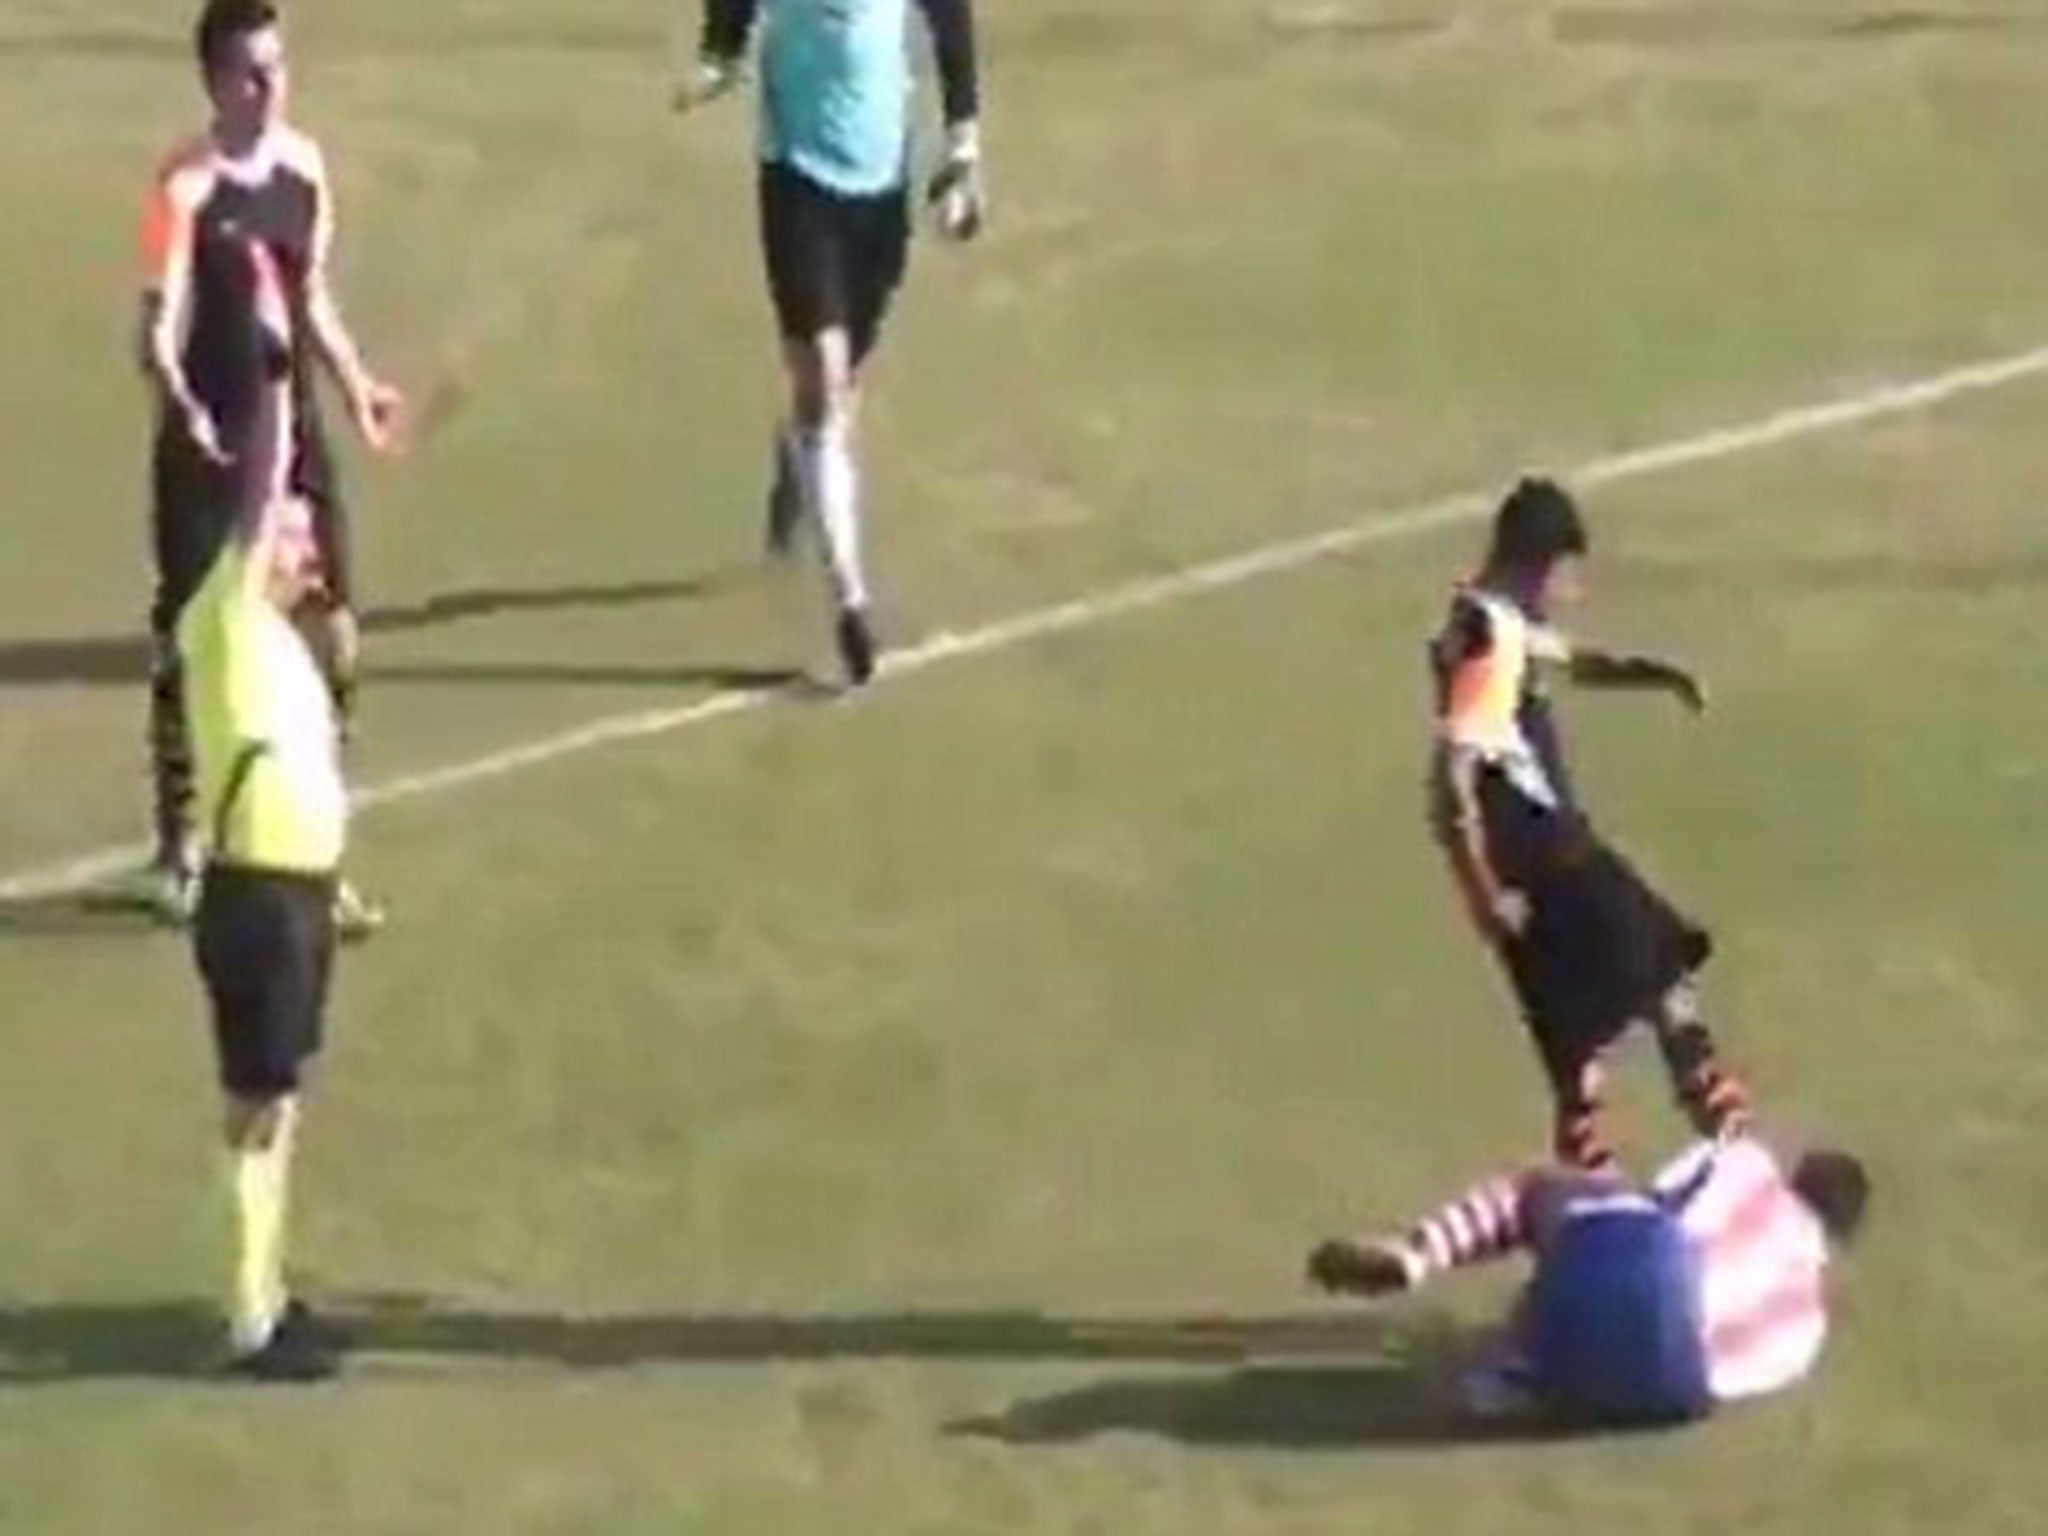 Sanayispor player Mehmet Degirmenci kicks Kayhan Karakas of Dallicaspor in the head